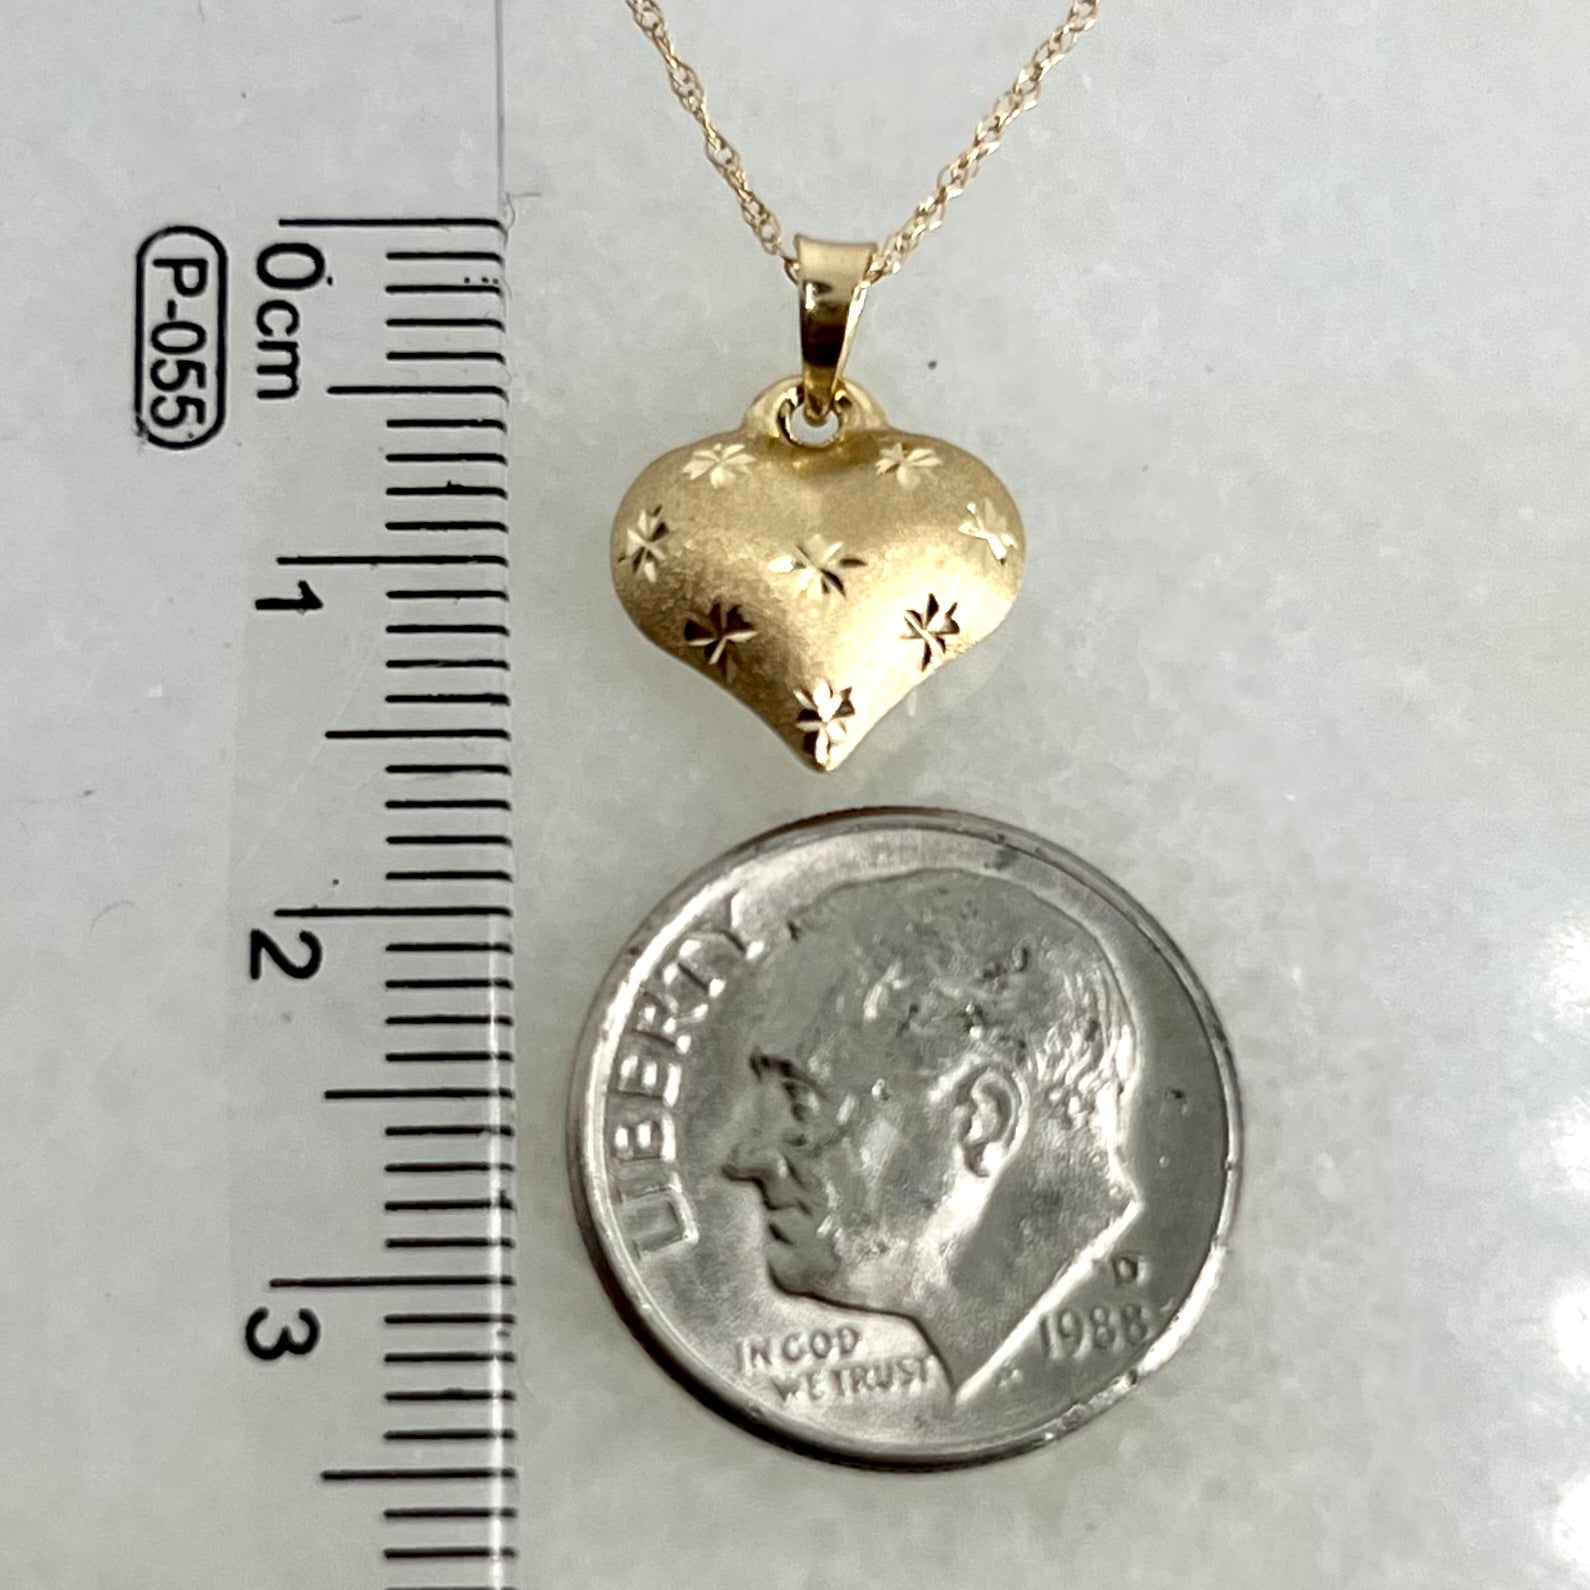 14K Yellow Gold 16mm Diamond Cut Puffed Heart Charm w/ 10K Chain